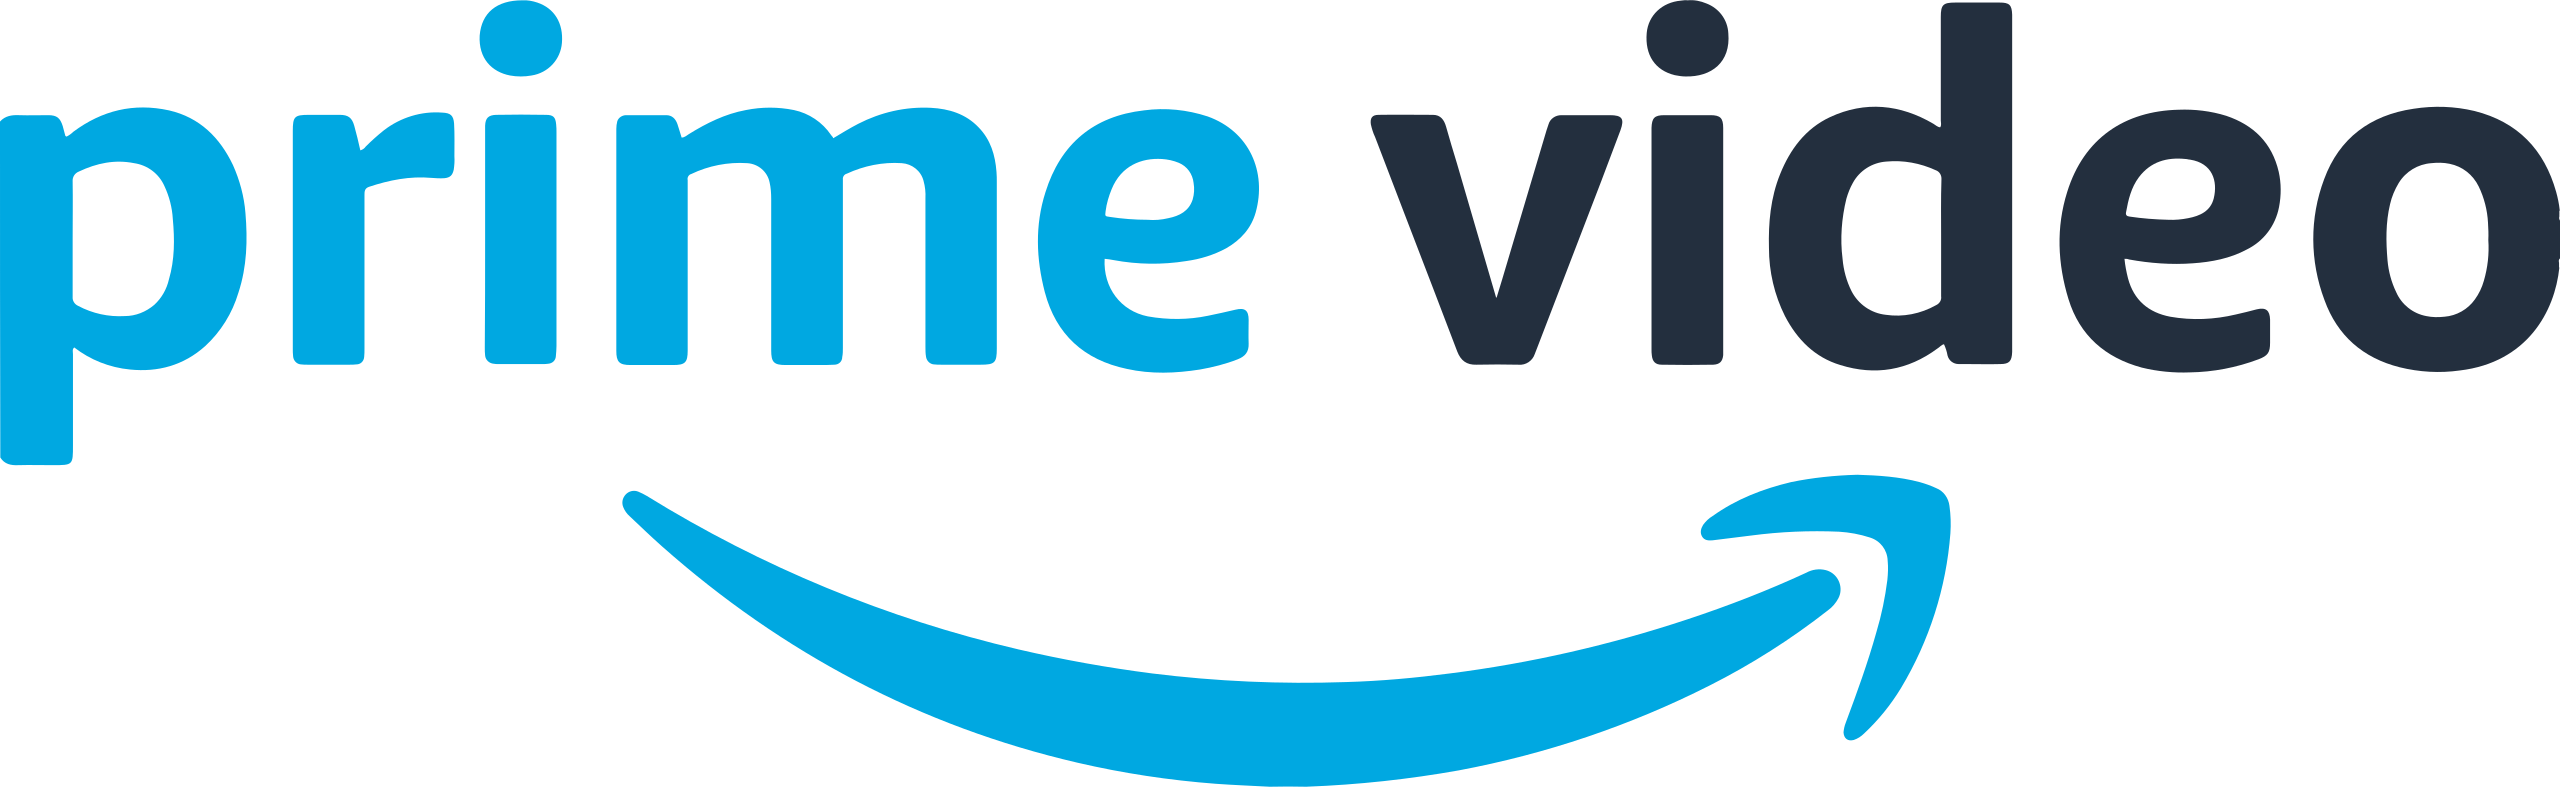 Amazon_Prime_Video_logo.svg (1)